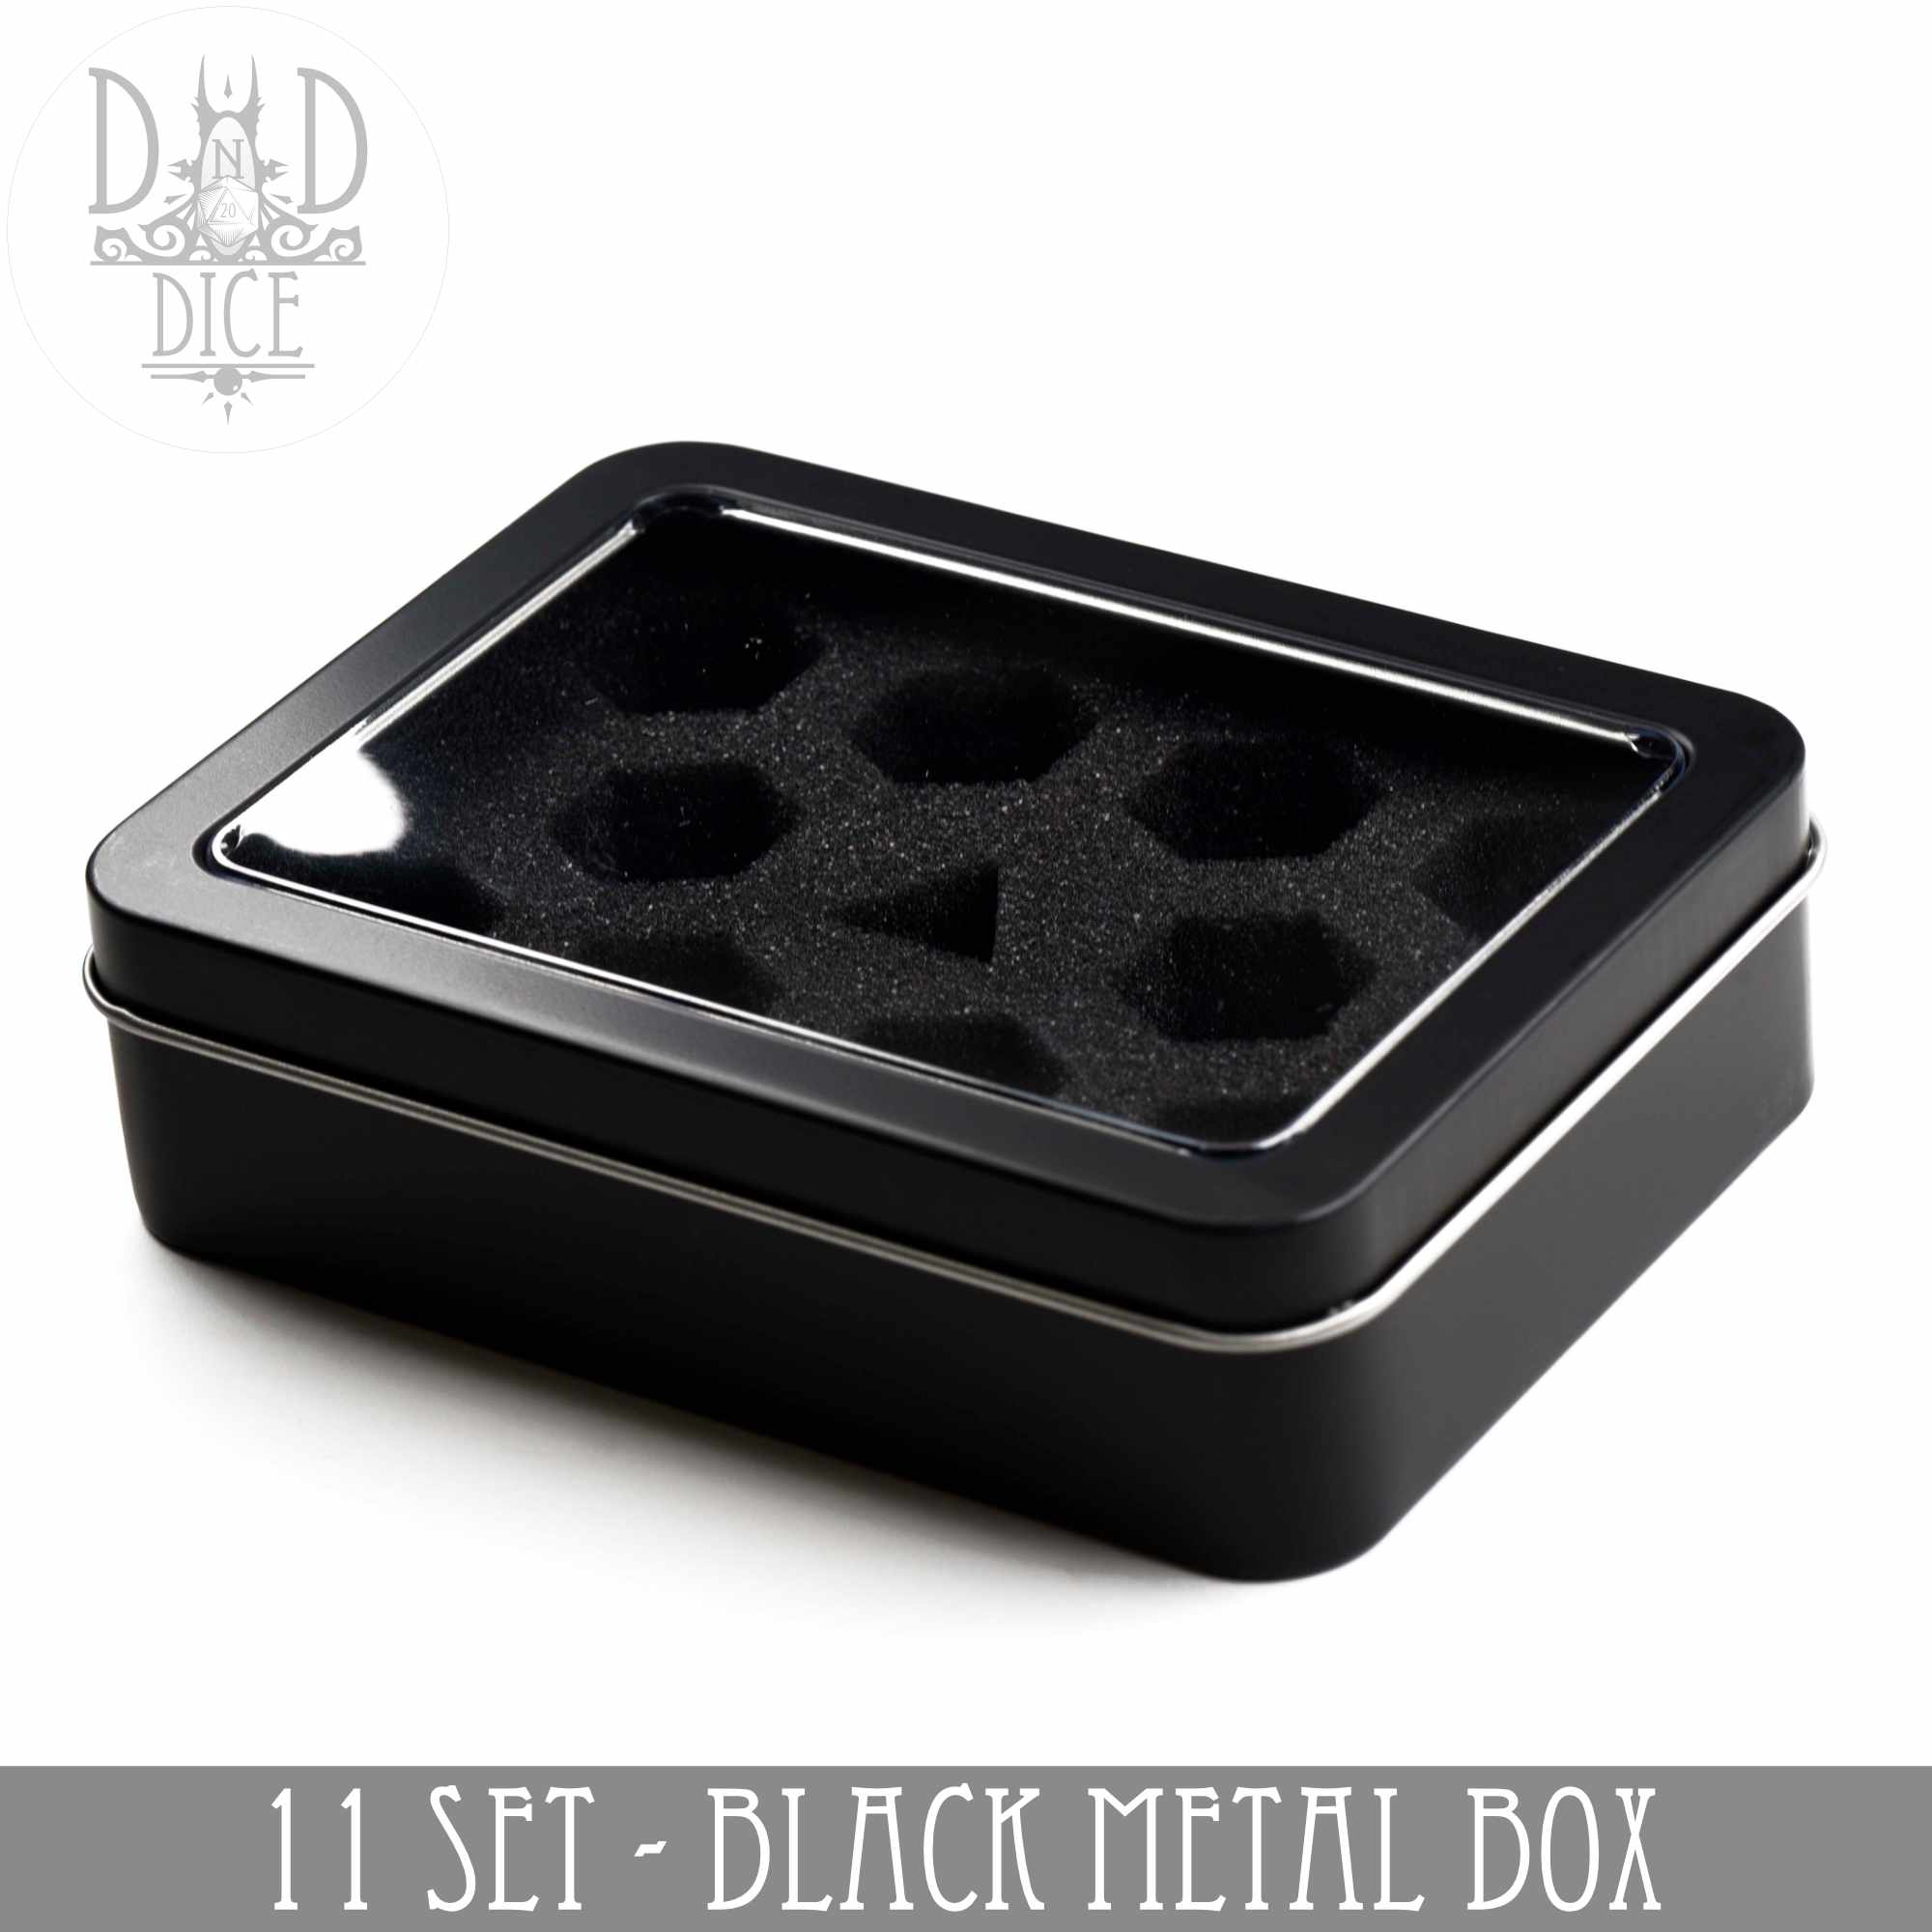 Metal Gift Box - 11 Dice Set